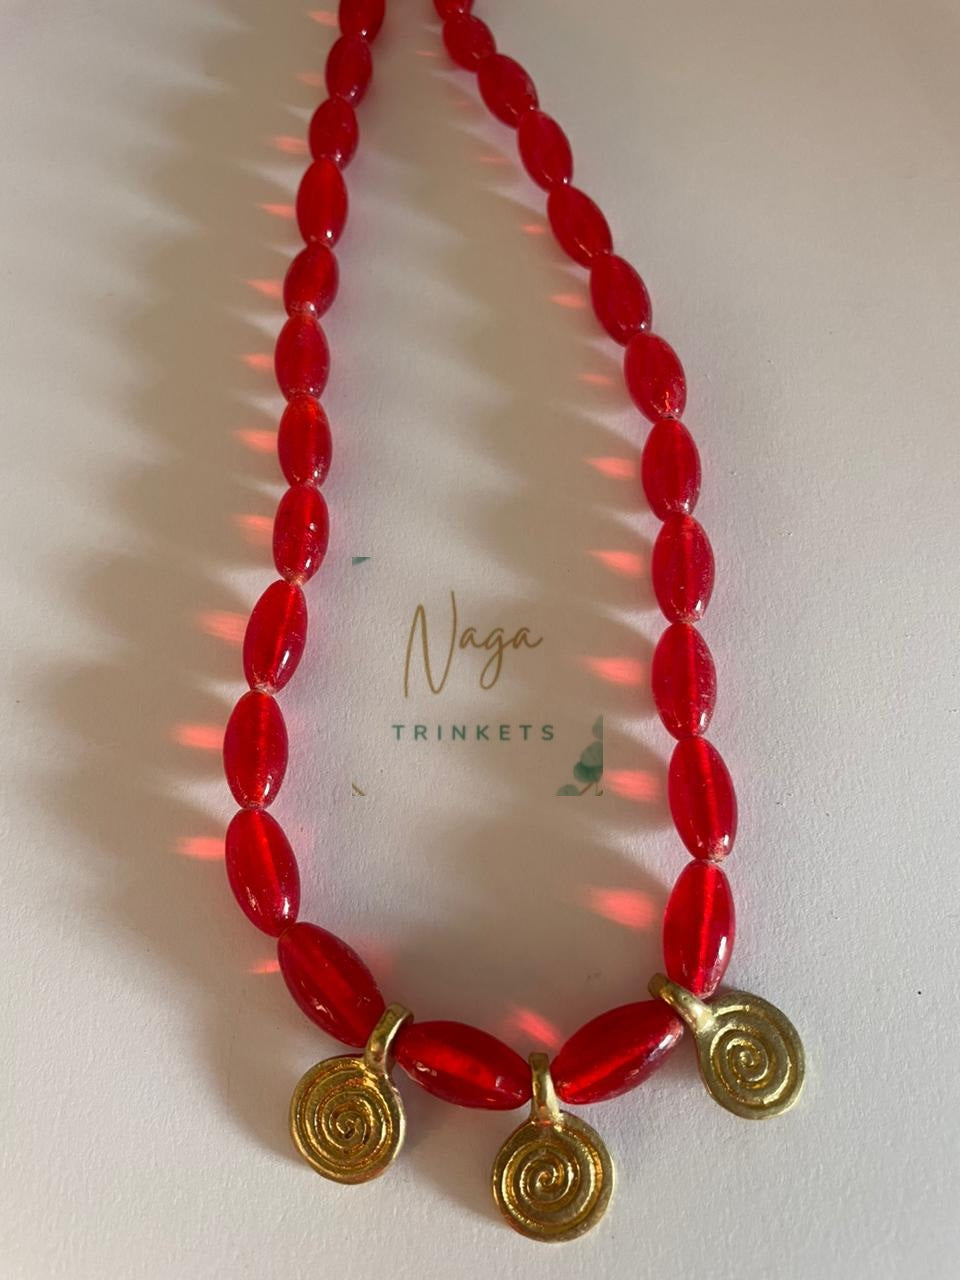 Naga Trinkets Necklace